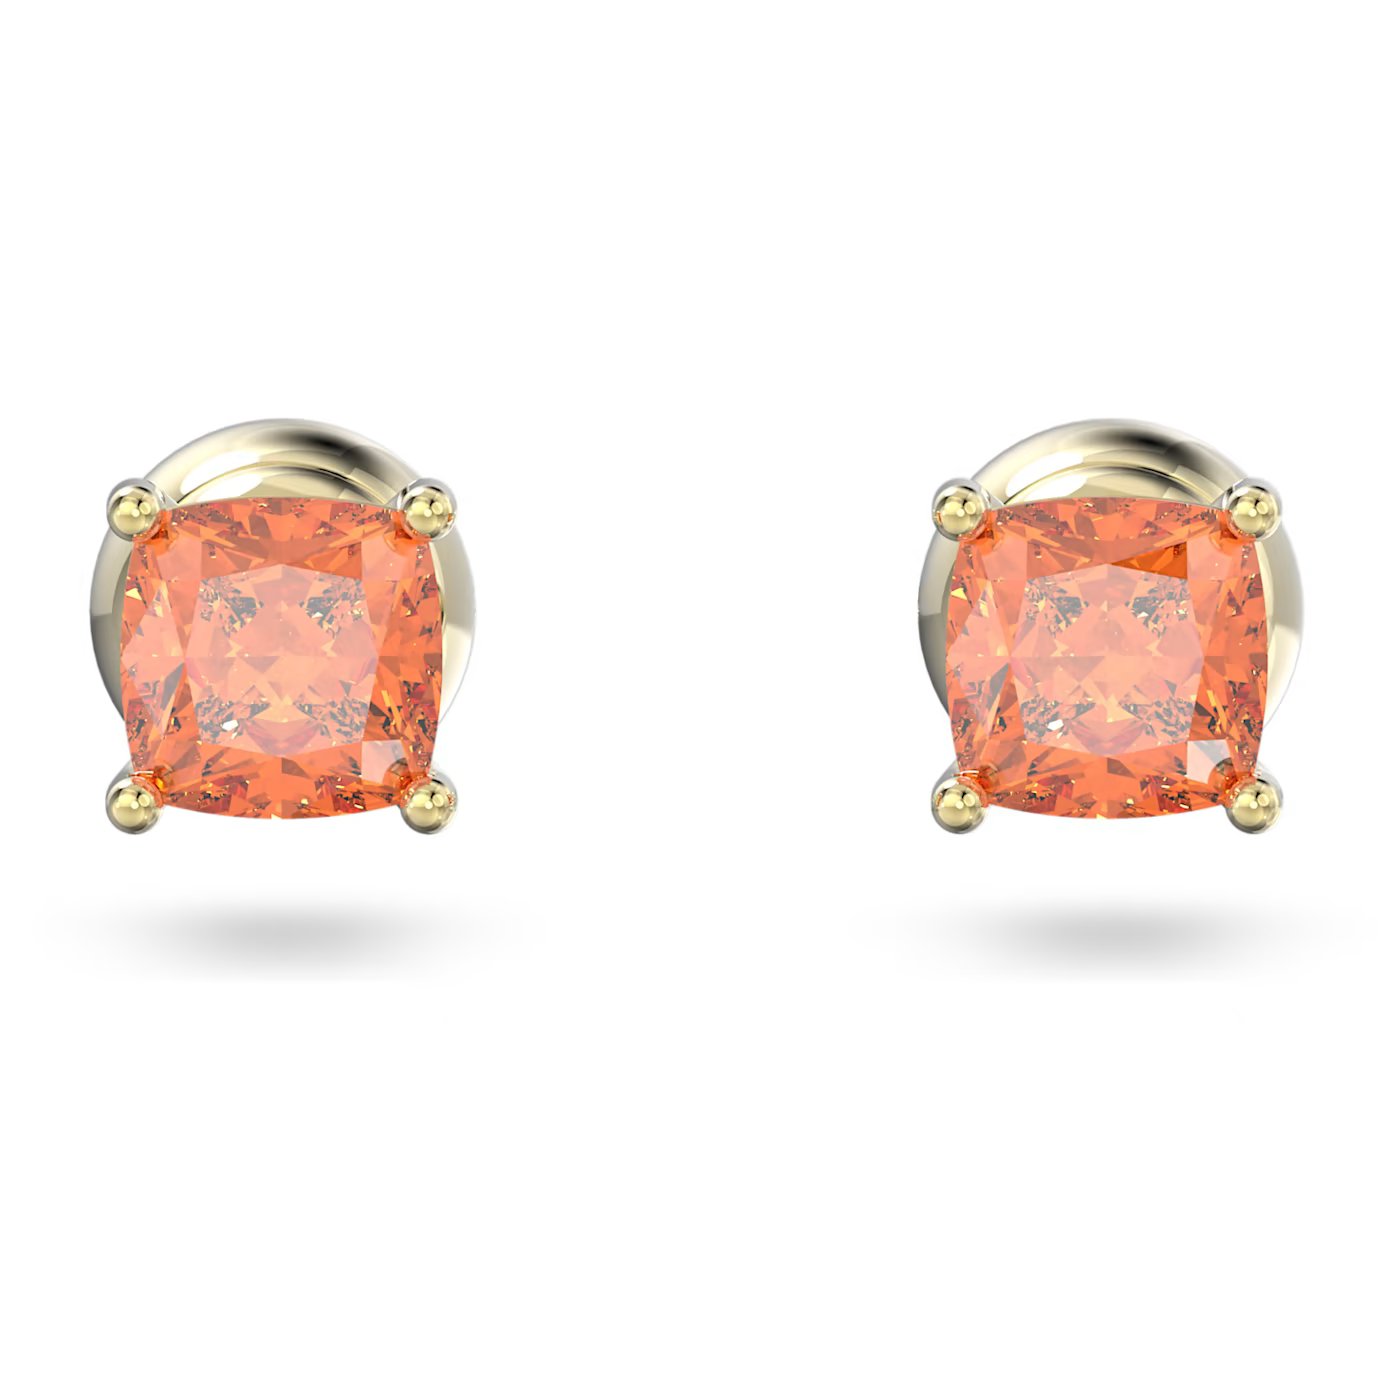 6331a53e5ff6e_px-stilla-stud-earrings--cushion-cut--orange--gold-tone-plated-swarovski-5639123.jpg